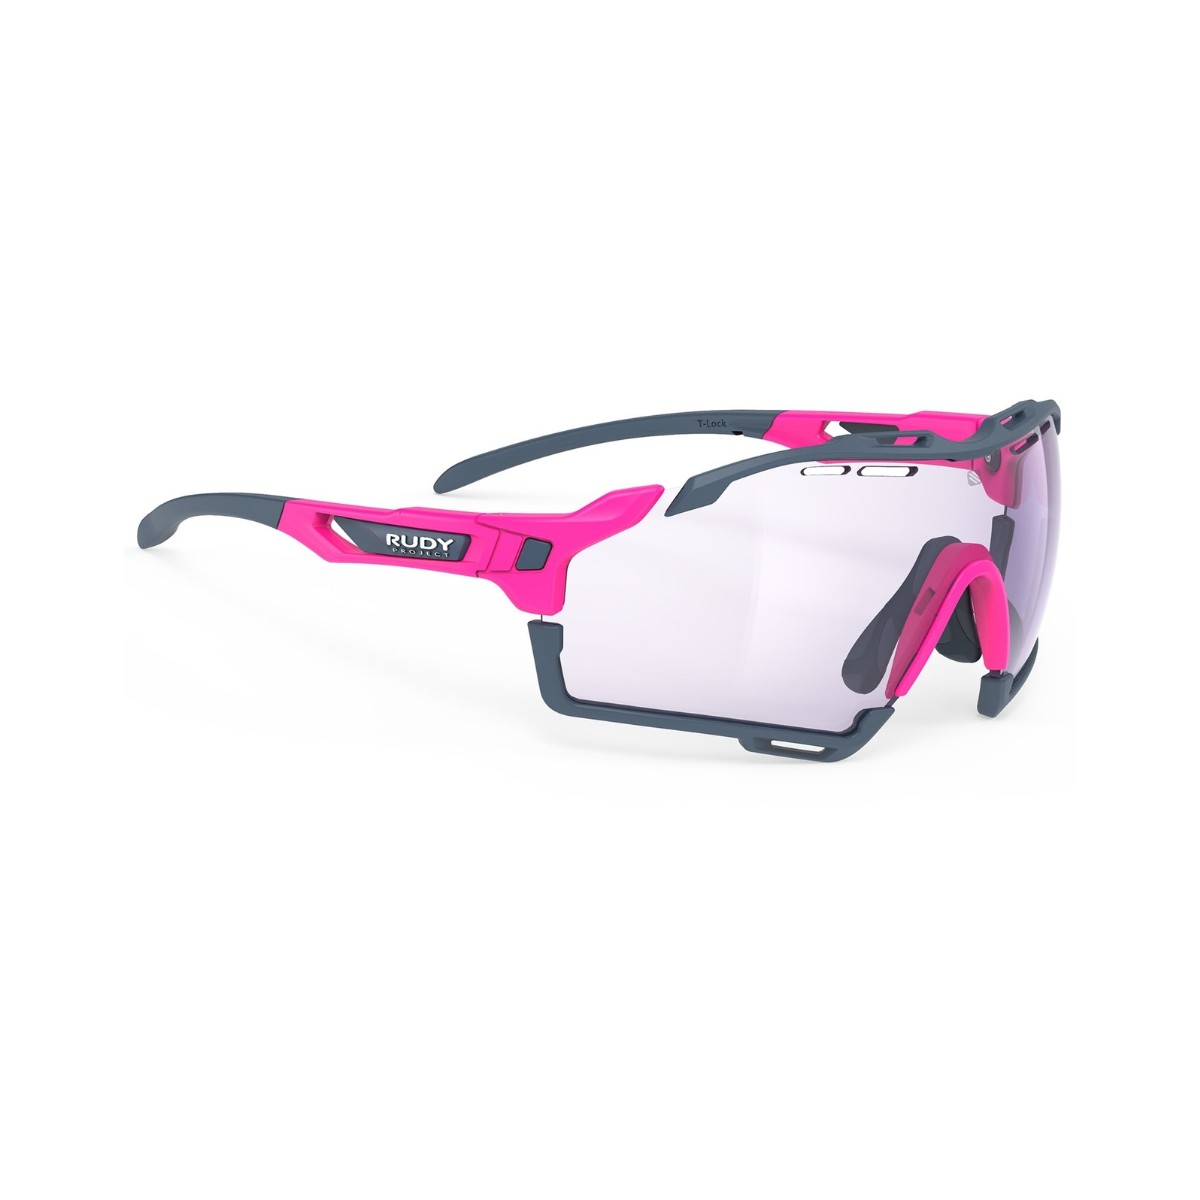 Photos - Sunglasses Rudy Project Cutline Impactx Photochromic Pink Gray Glasses SP637589-0004 